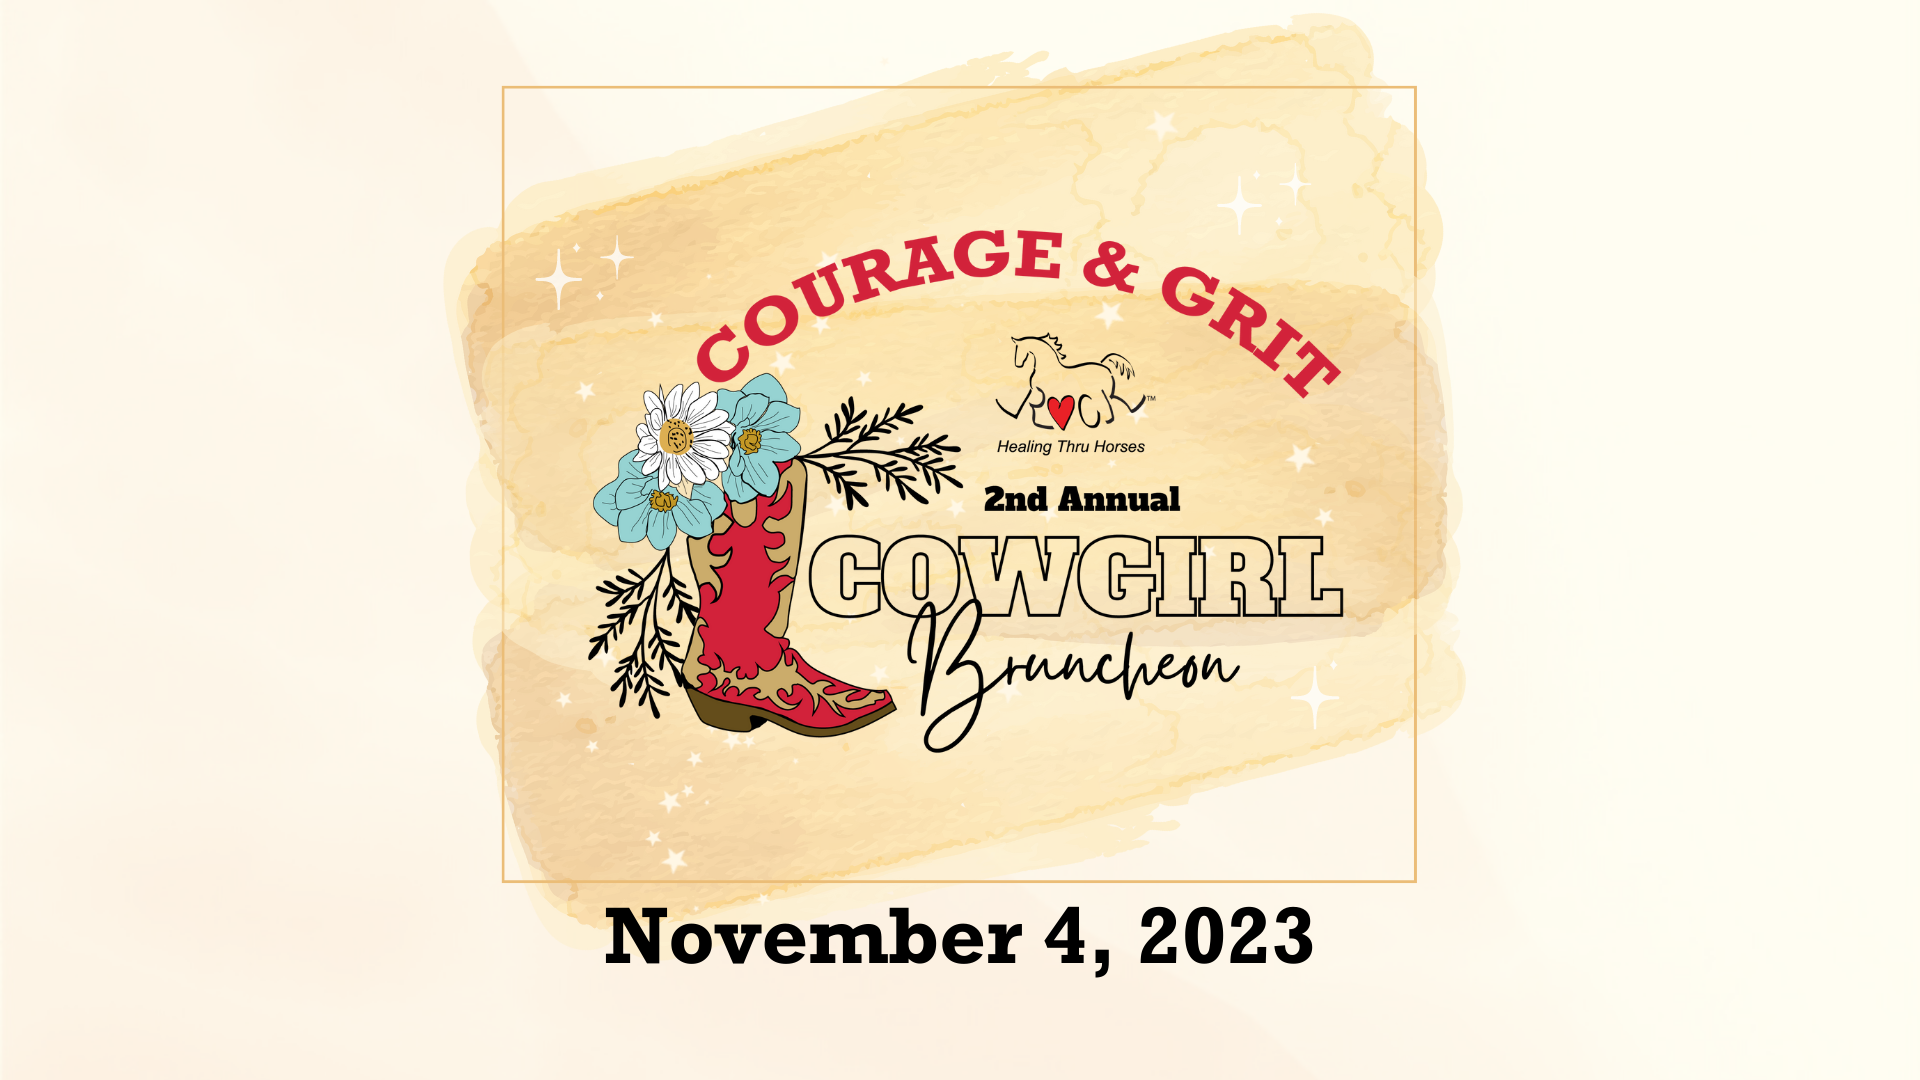 2nd Annual Cowgirl Bruncheon, November 4, 2023